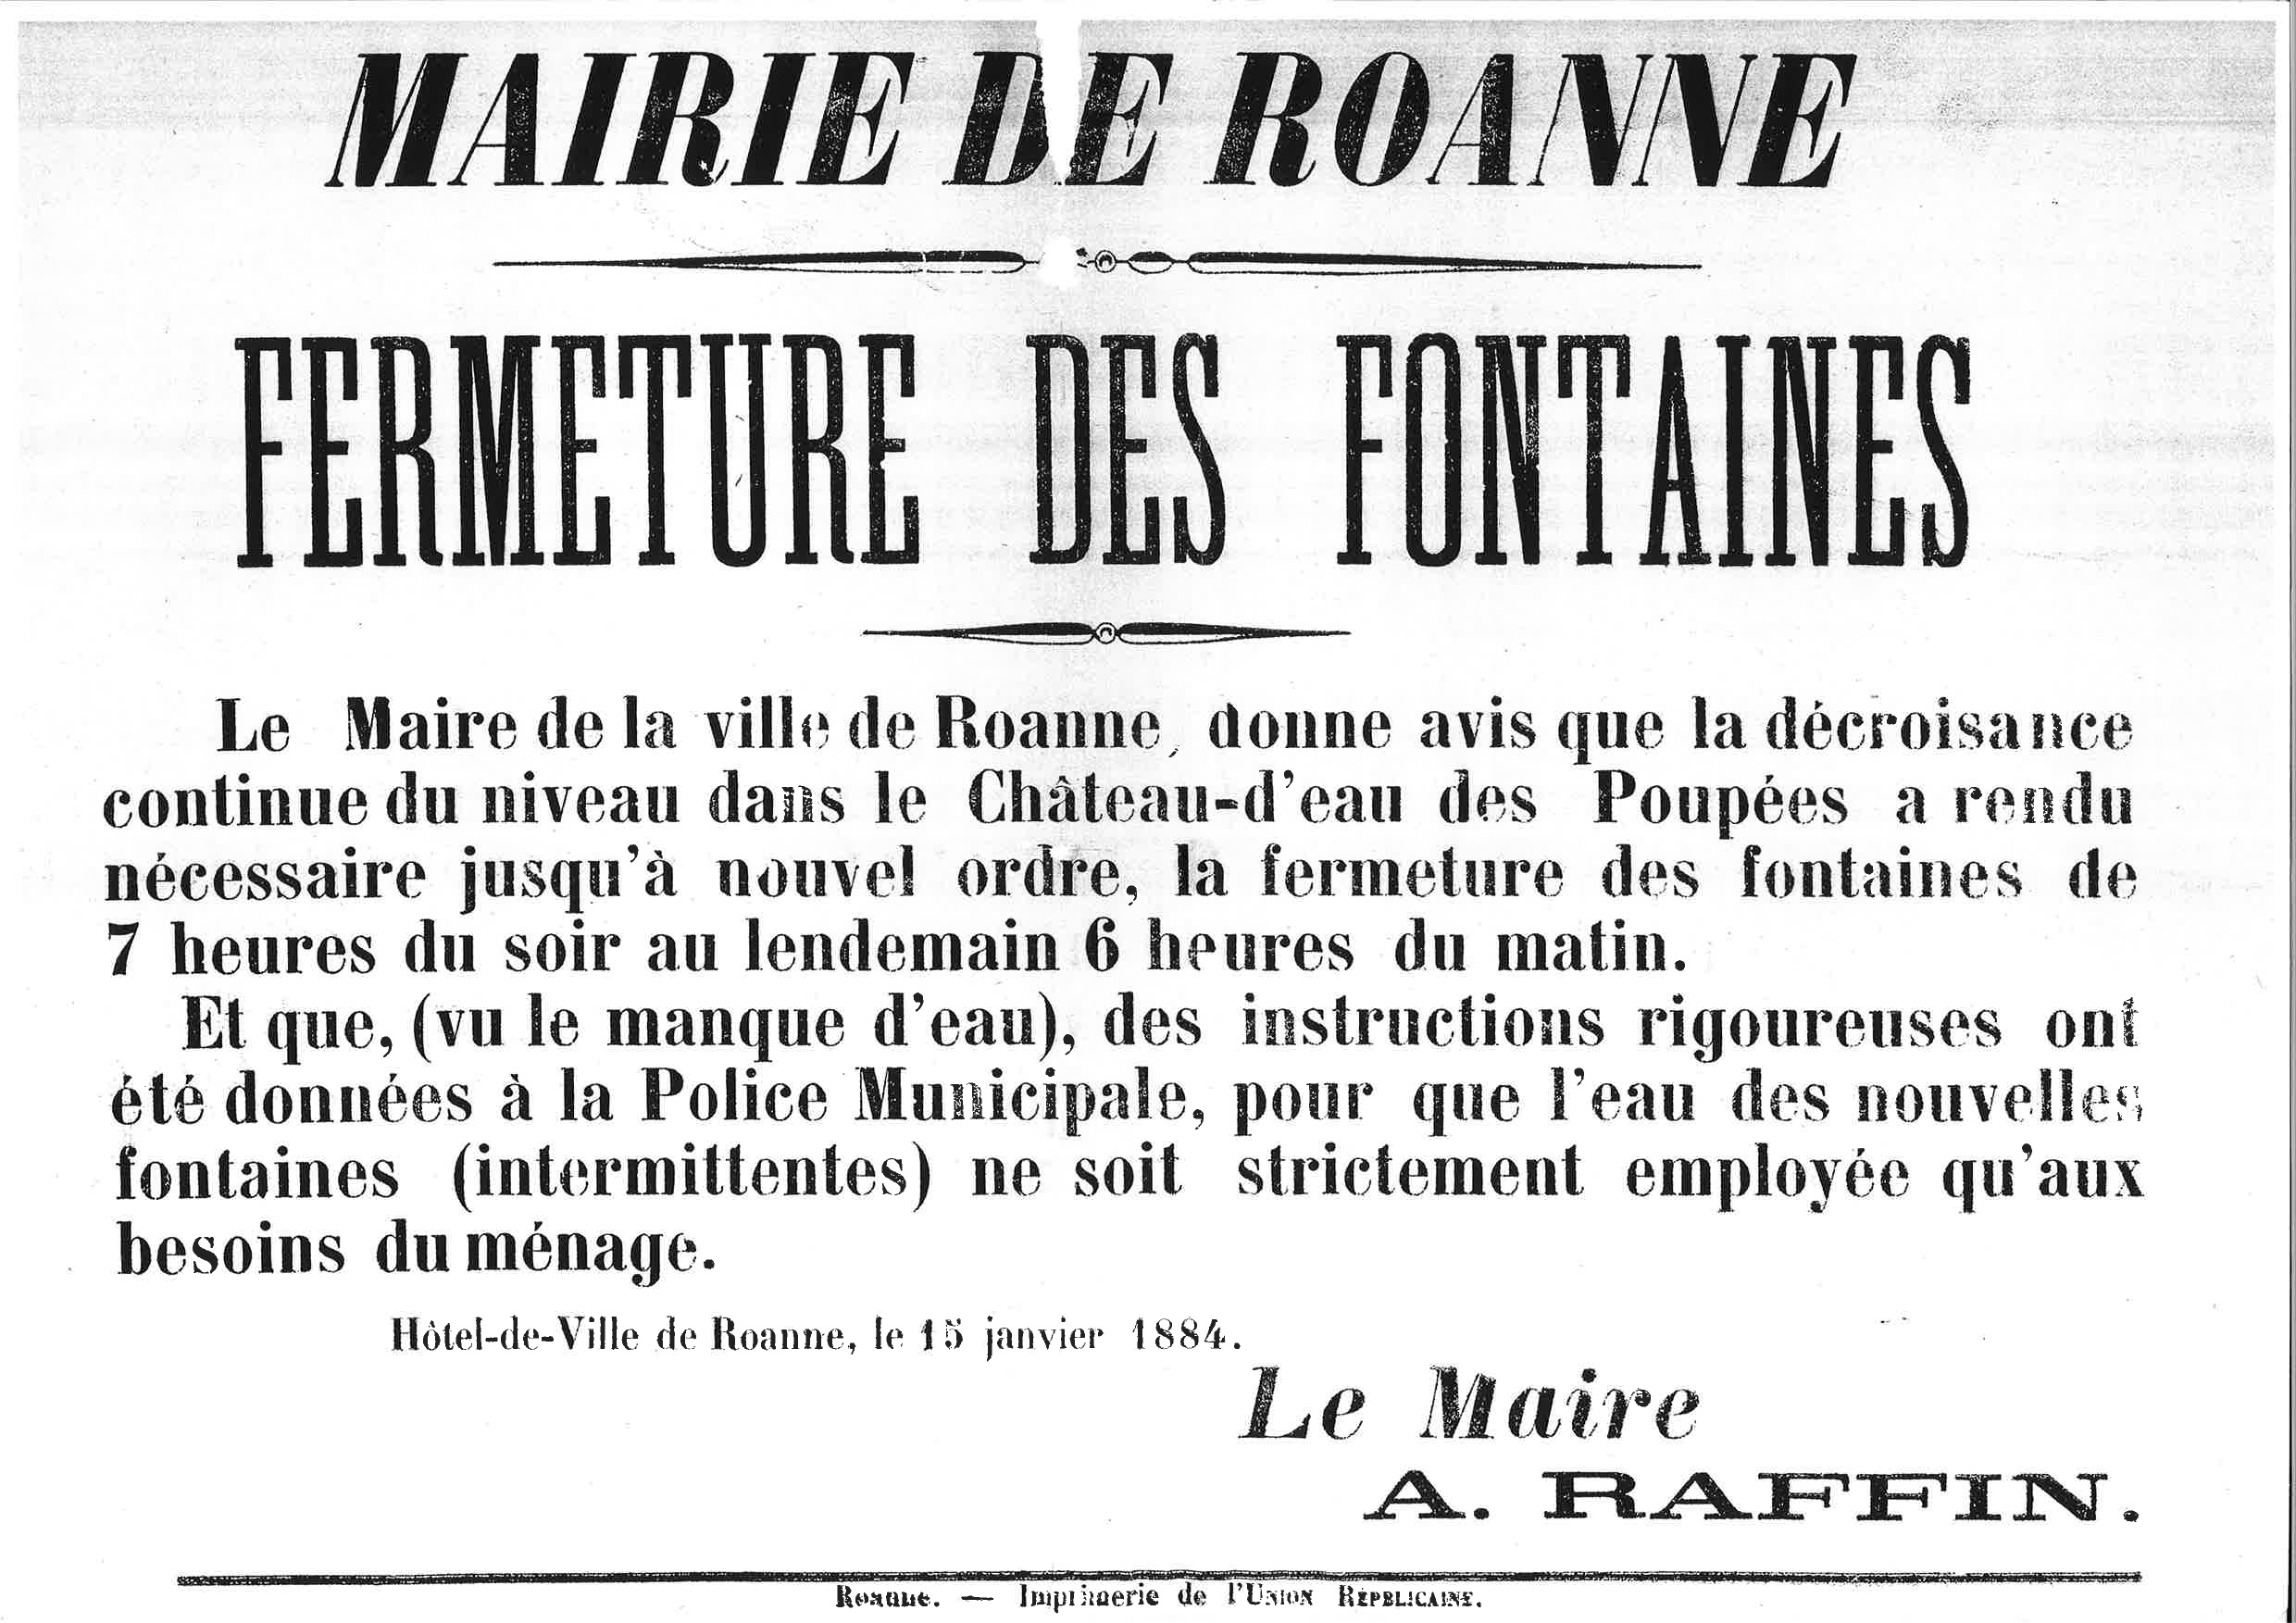 18840115 FermetureFontaines